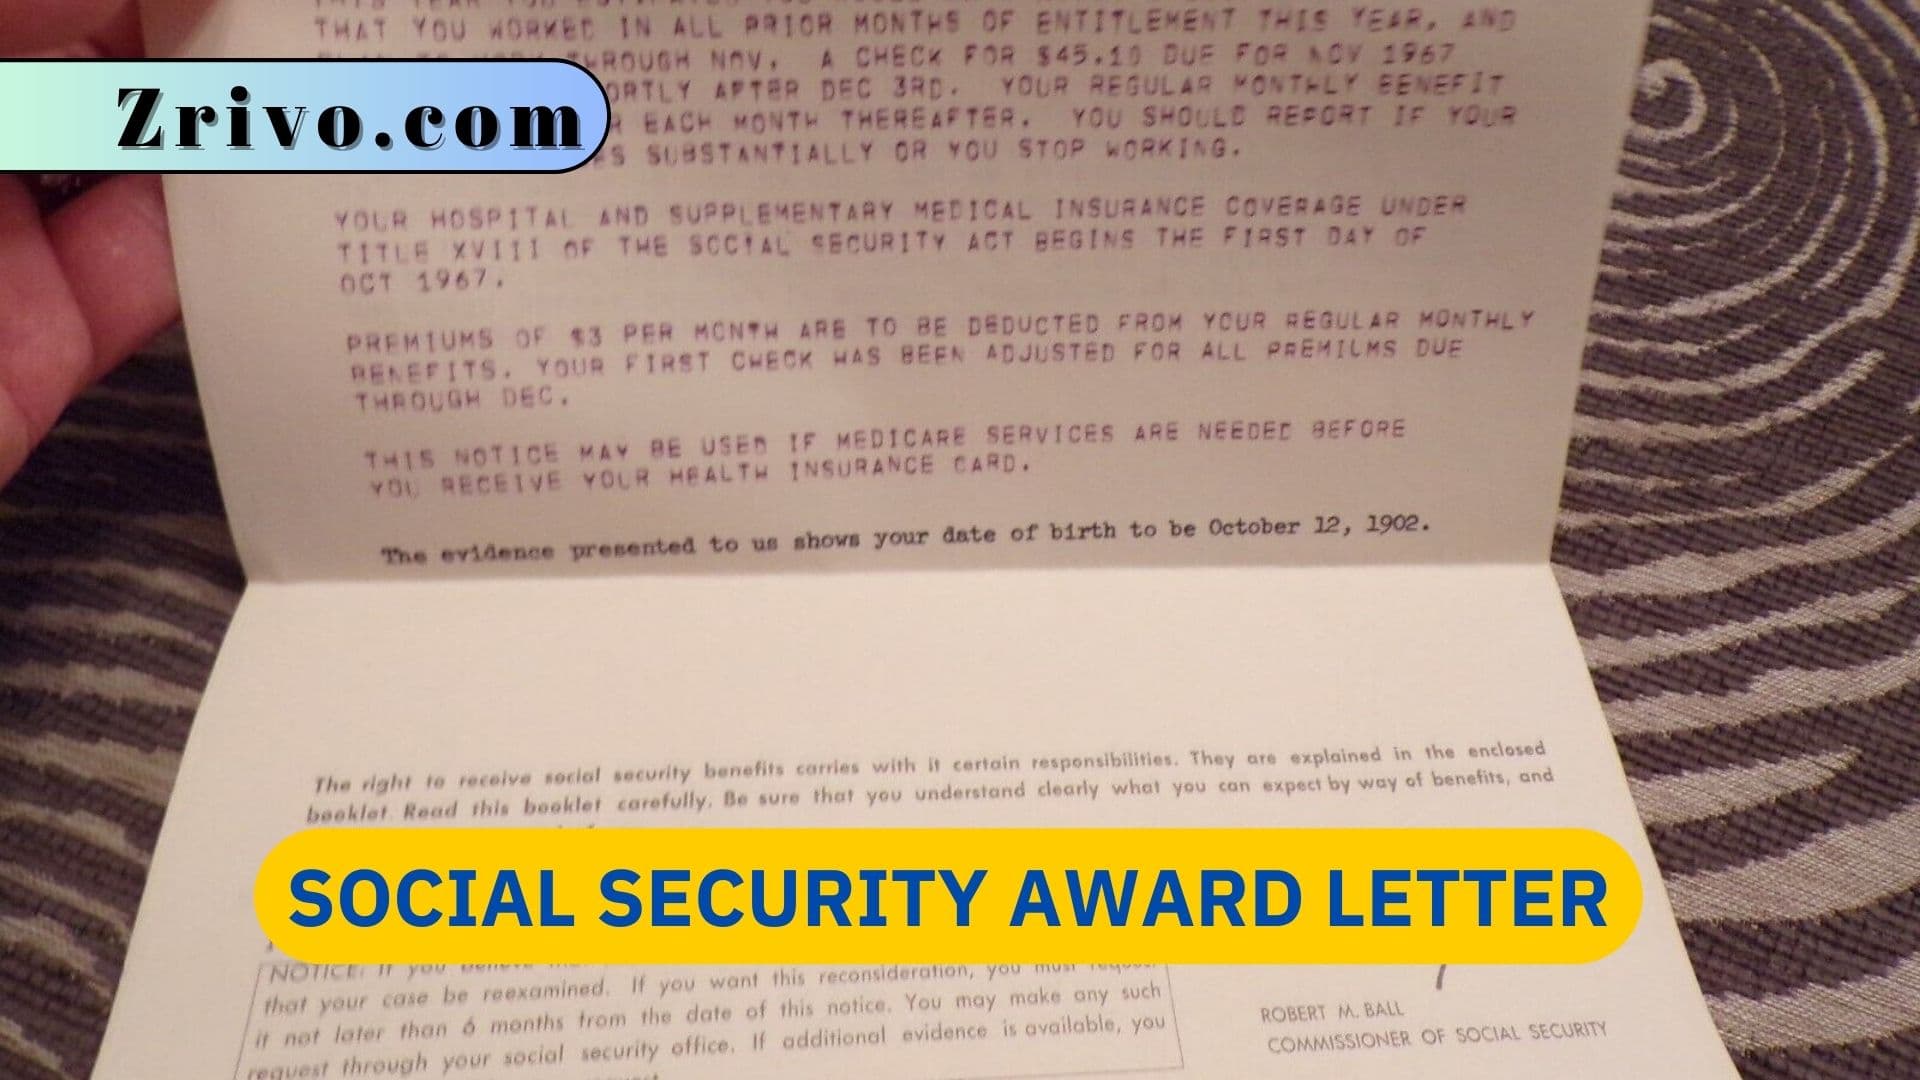 Social Security Award Letter